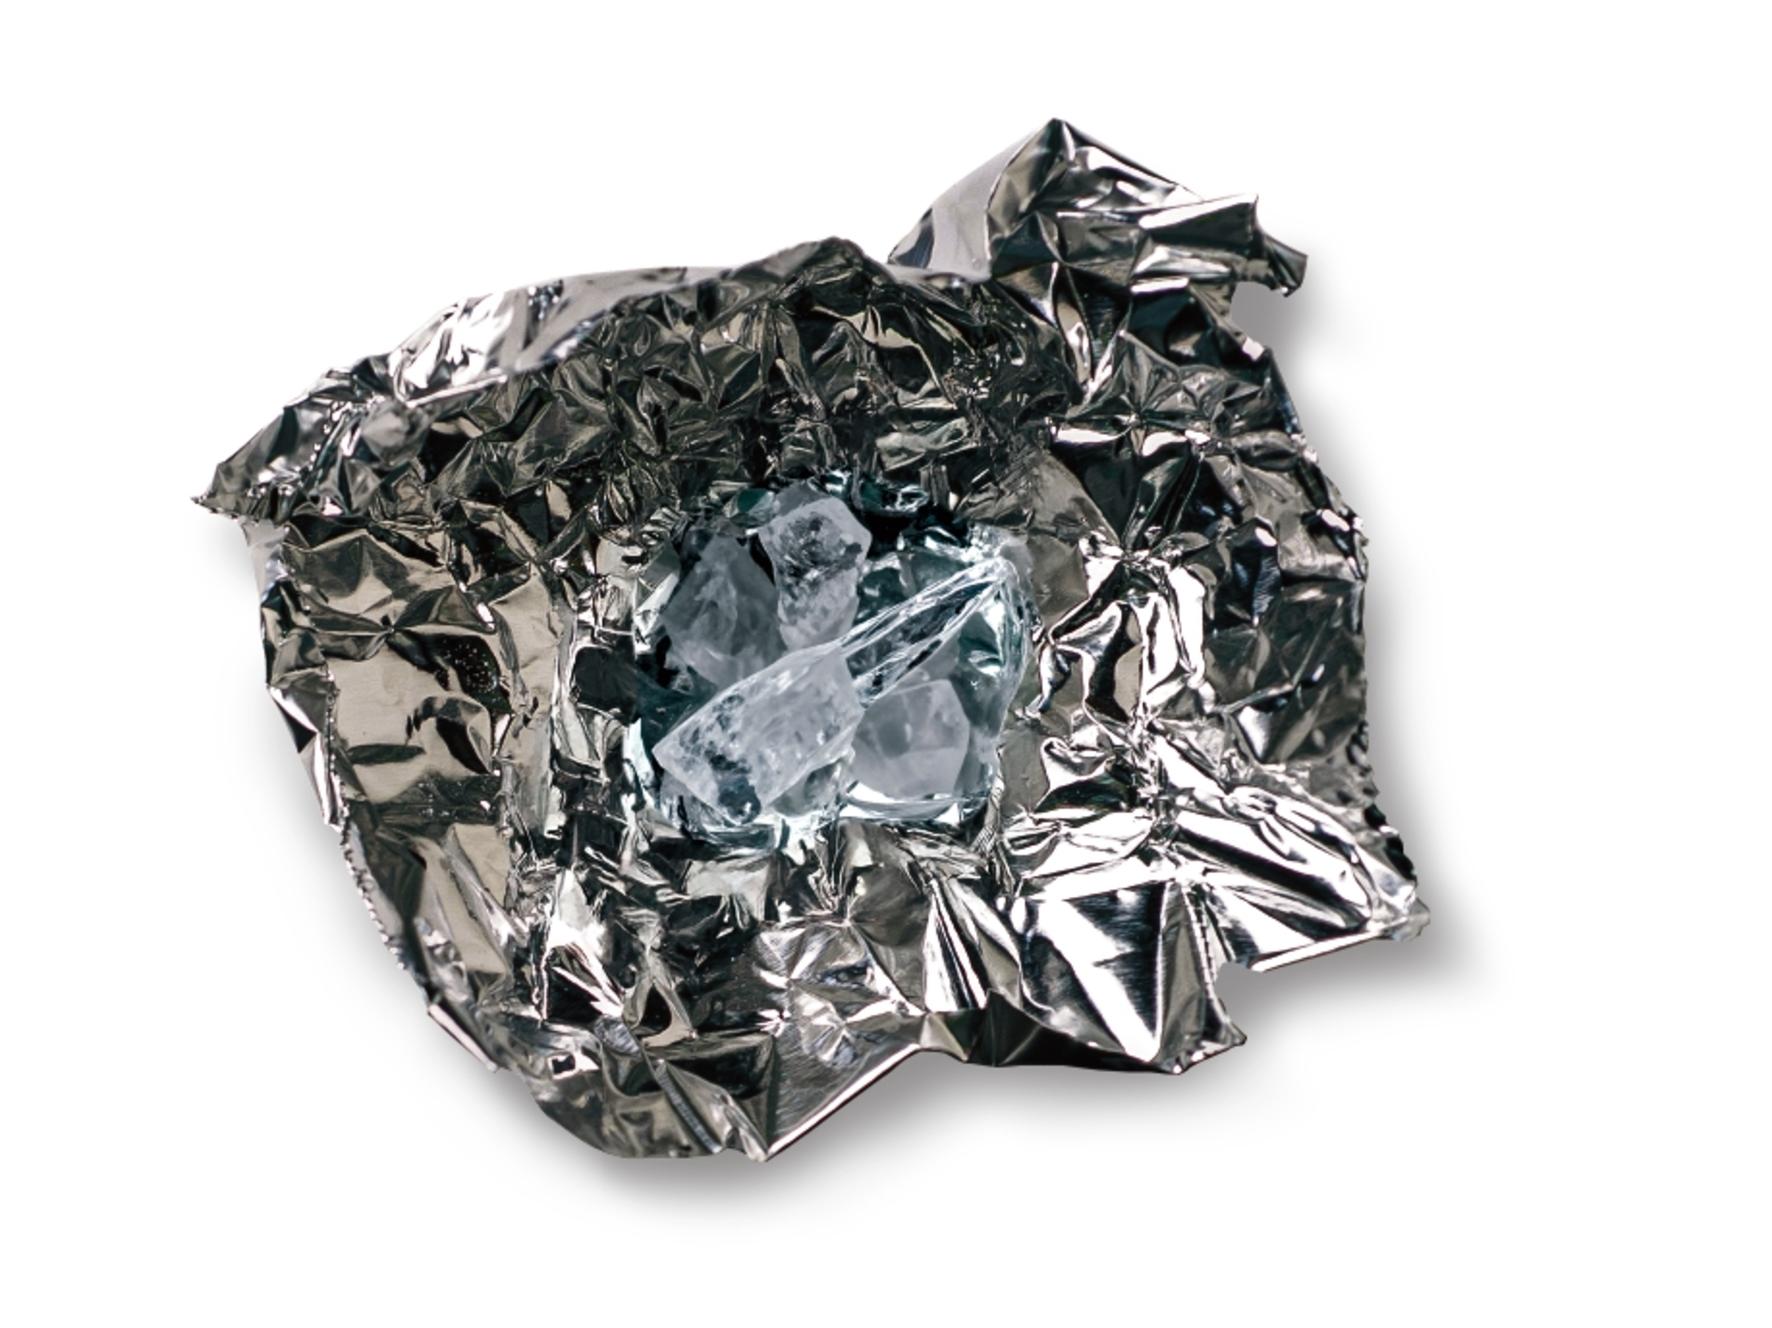 Dangers Of Using Tin (Aluminum) Foil To Smoke Drugs